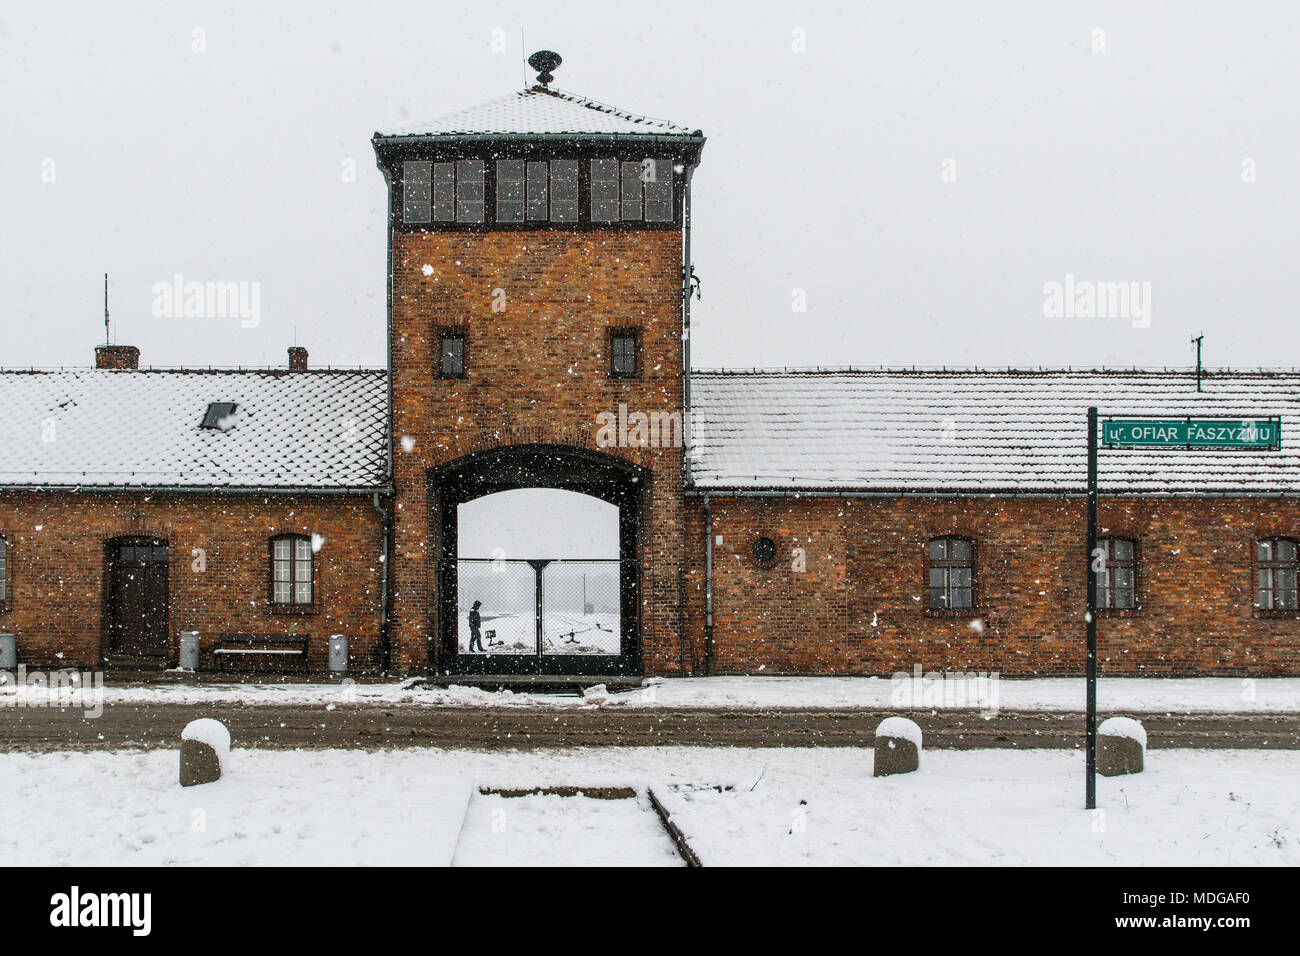 Auschwitz, Lesser Poland / Poland - Feb 04 2018: Auschwitz Birkenau, Nazi concentration and extermination camp. Stock Photo